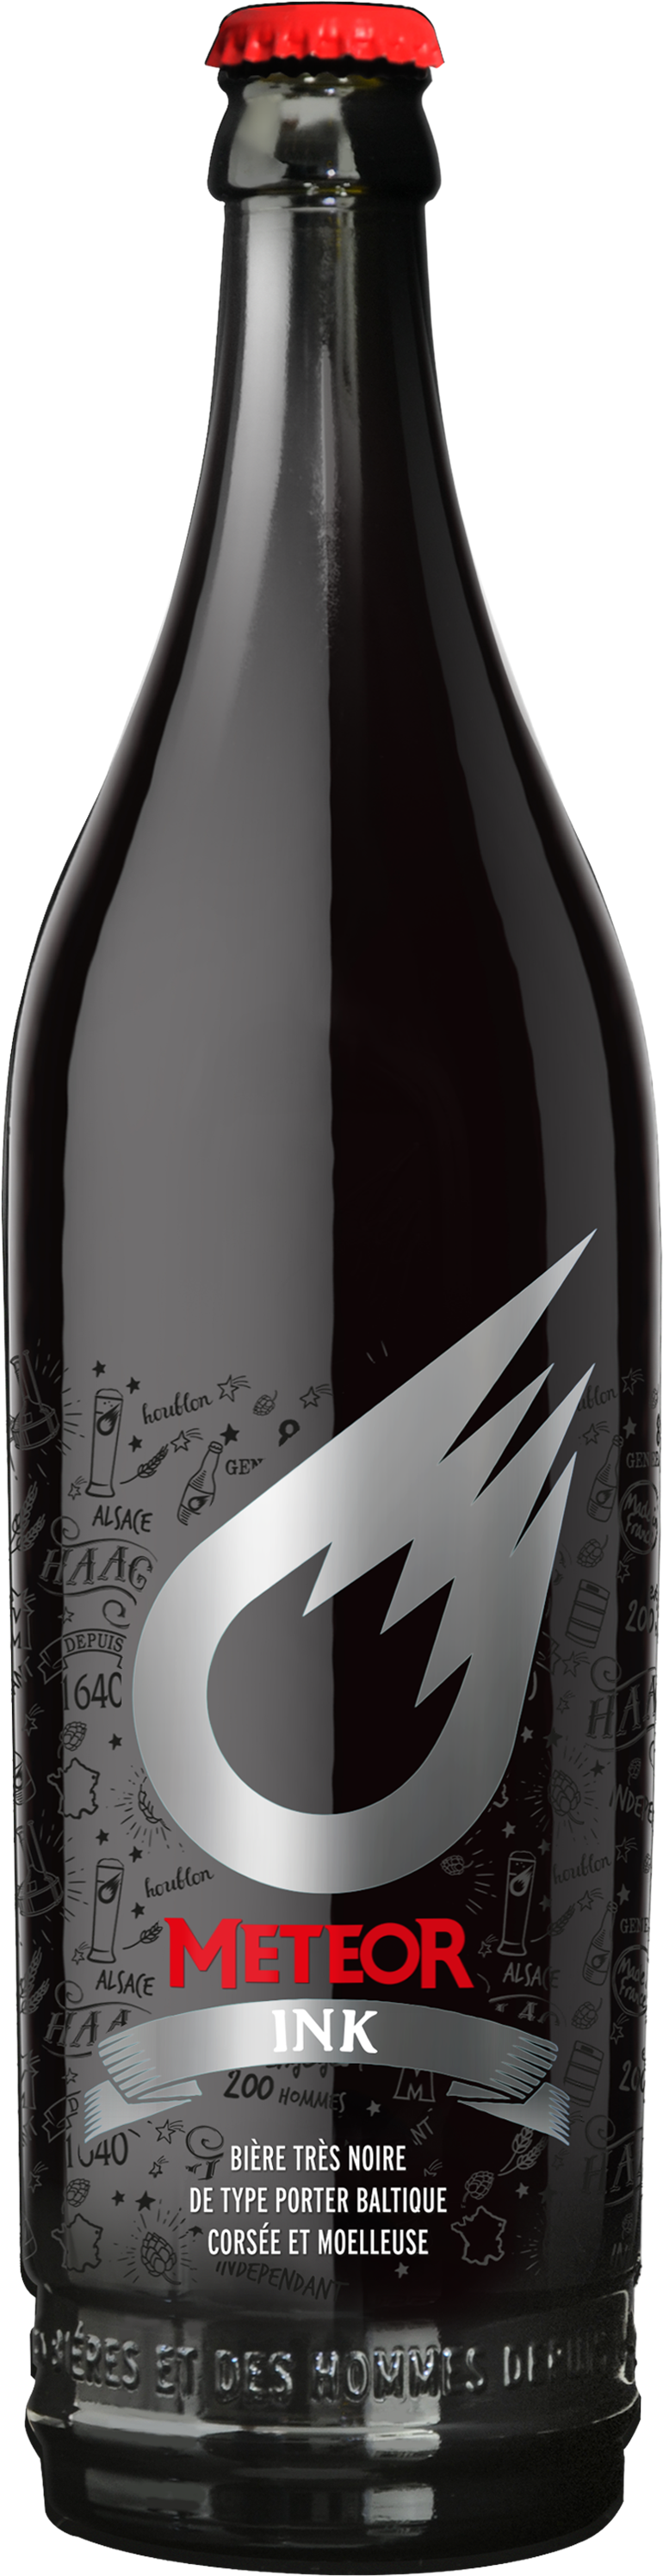 Meteor Ink Beer Bottle